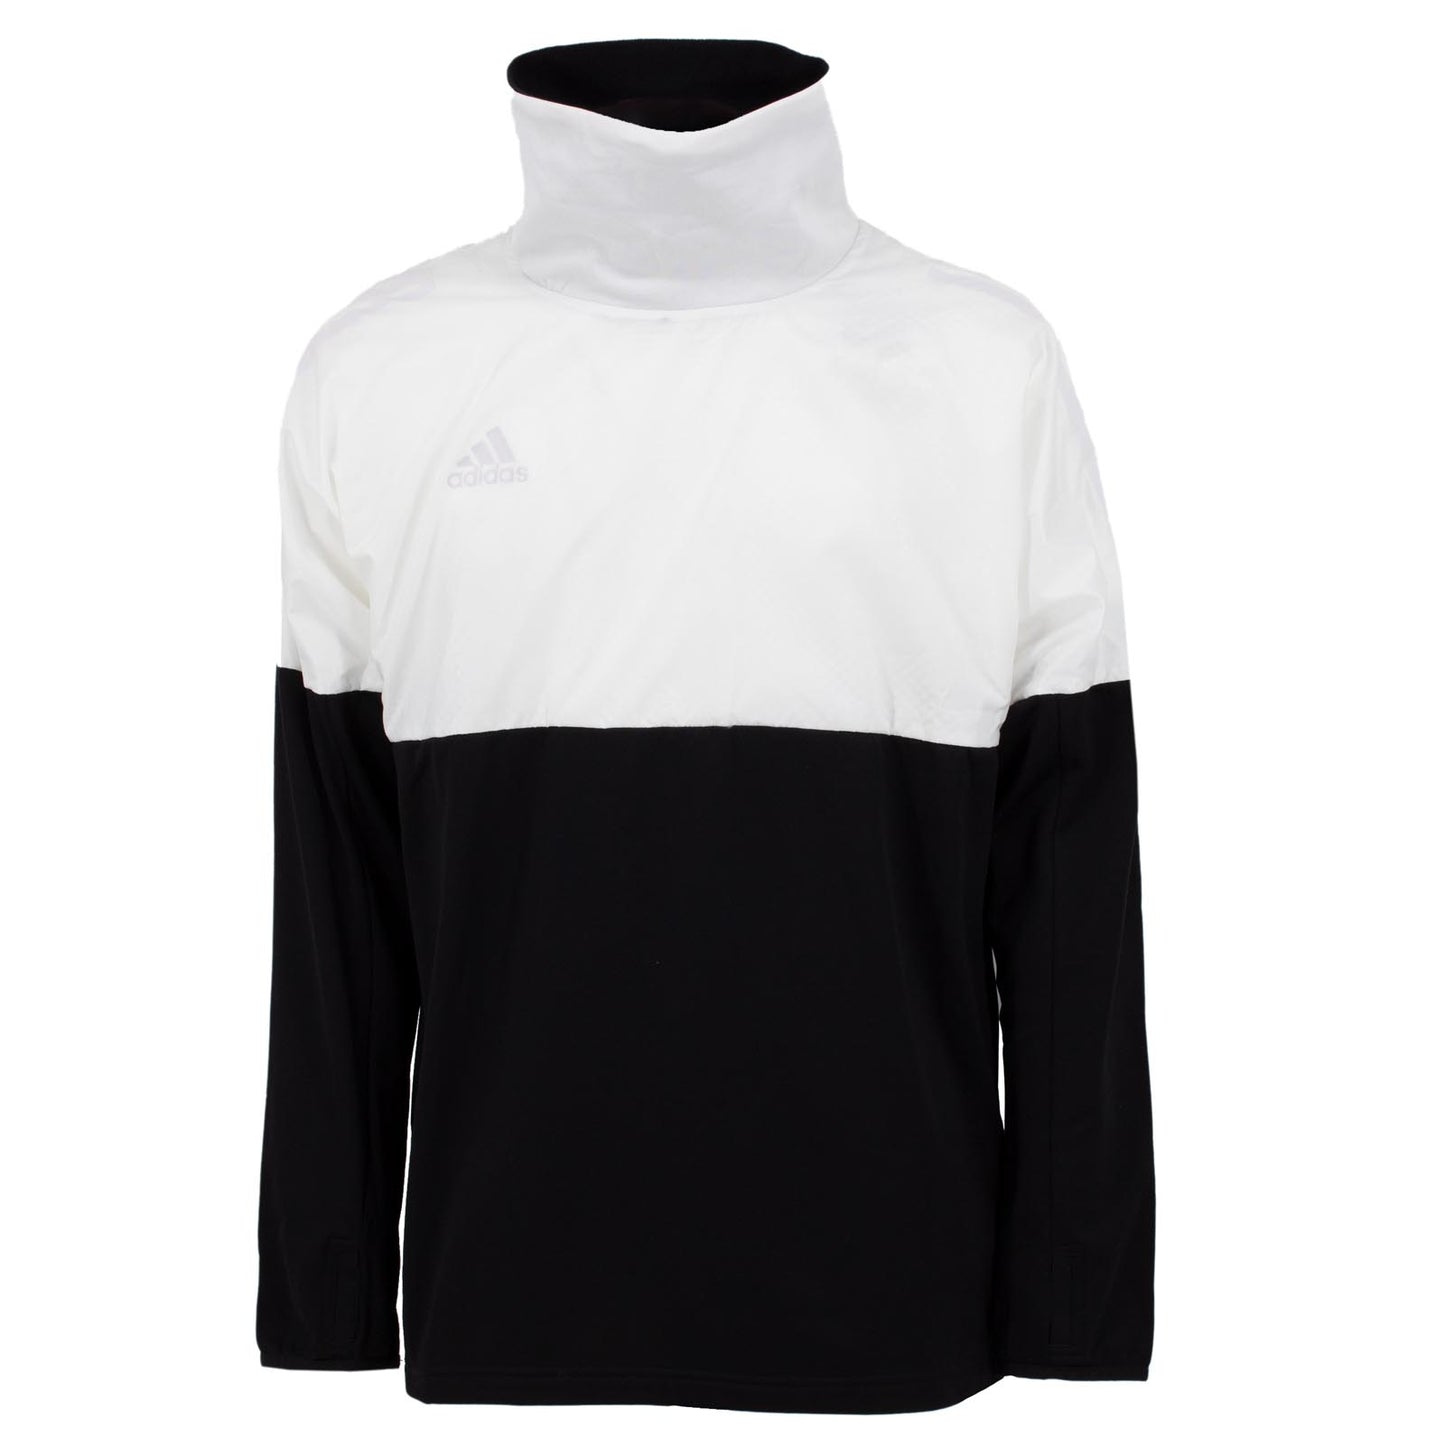 Adidas Tango Hybrid Fussball Top Herren Trainingsshirt Sweatshirt Weiß CE8165